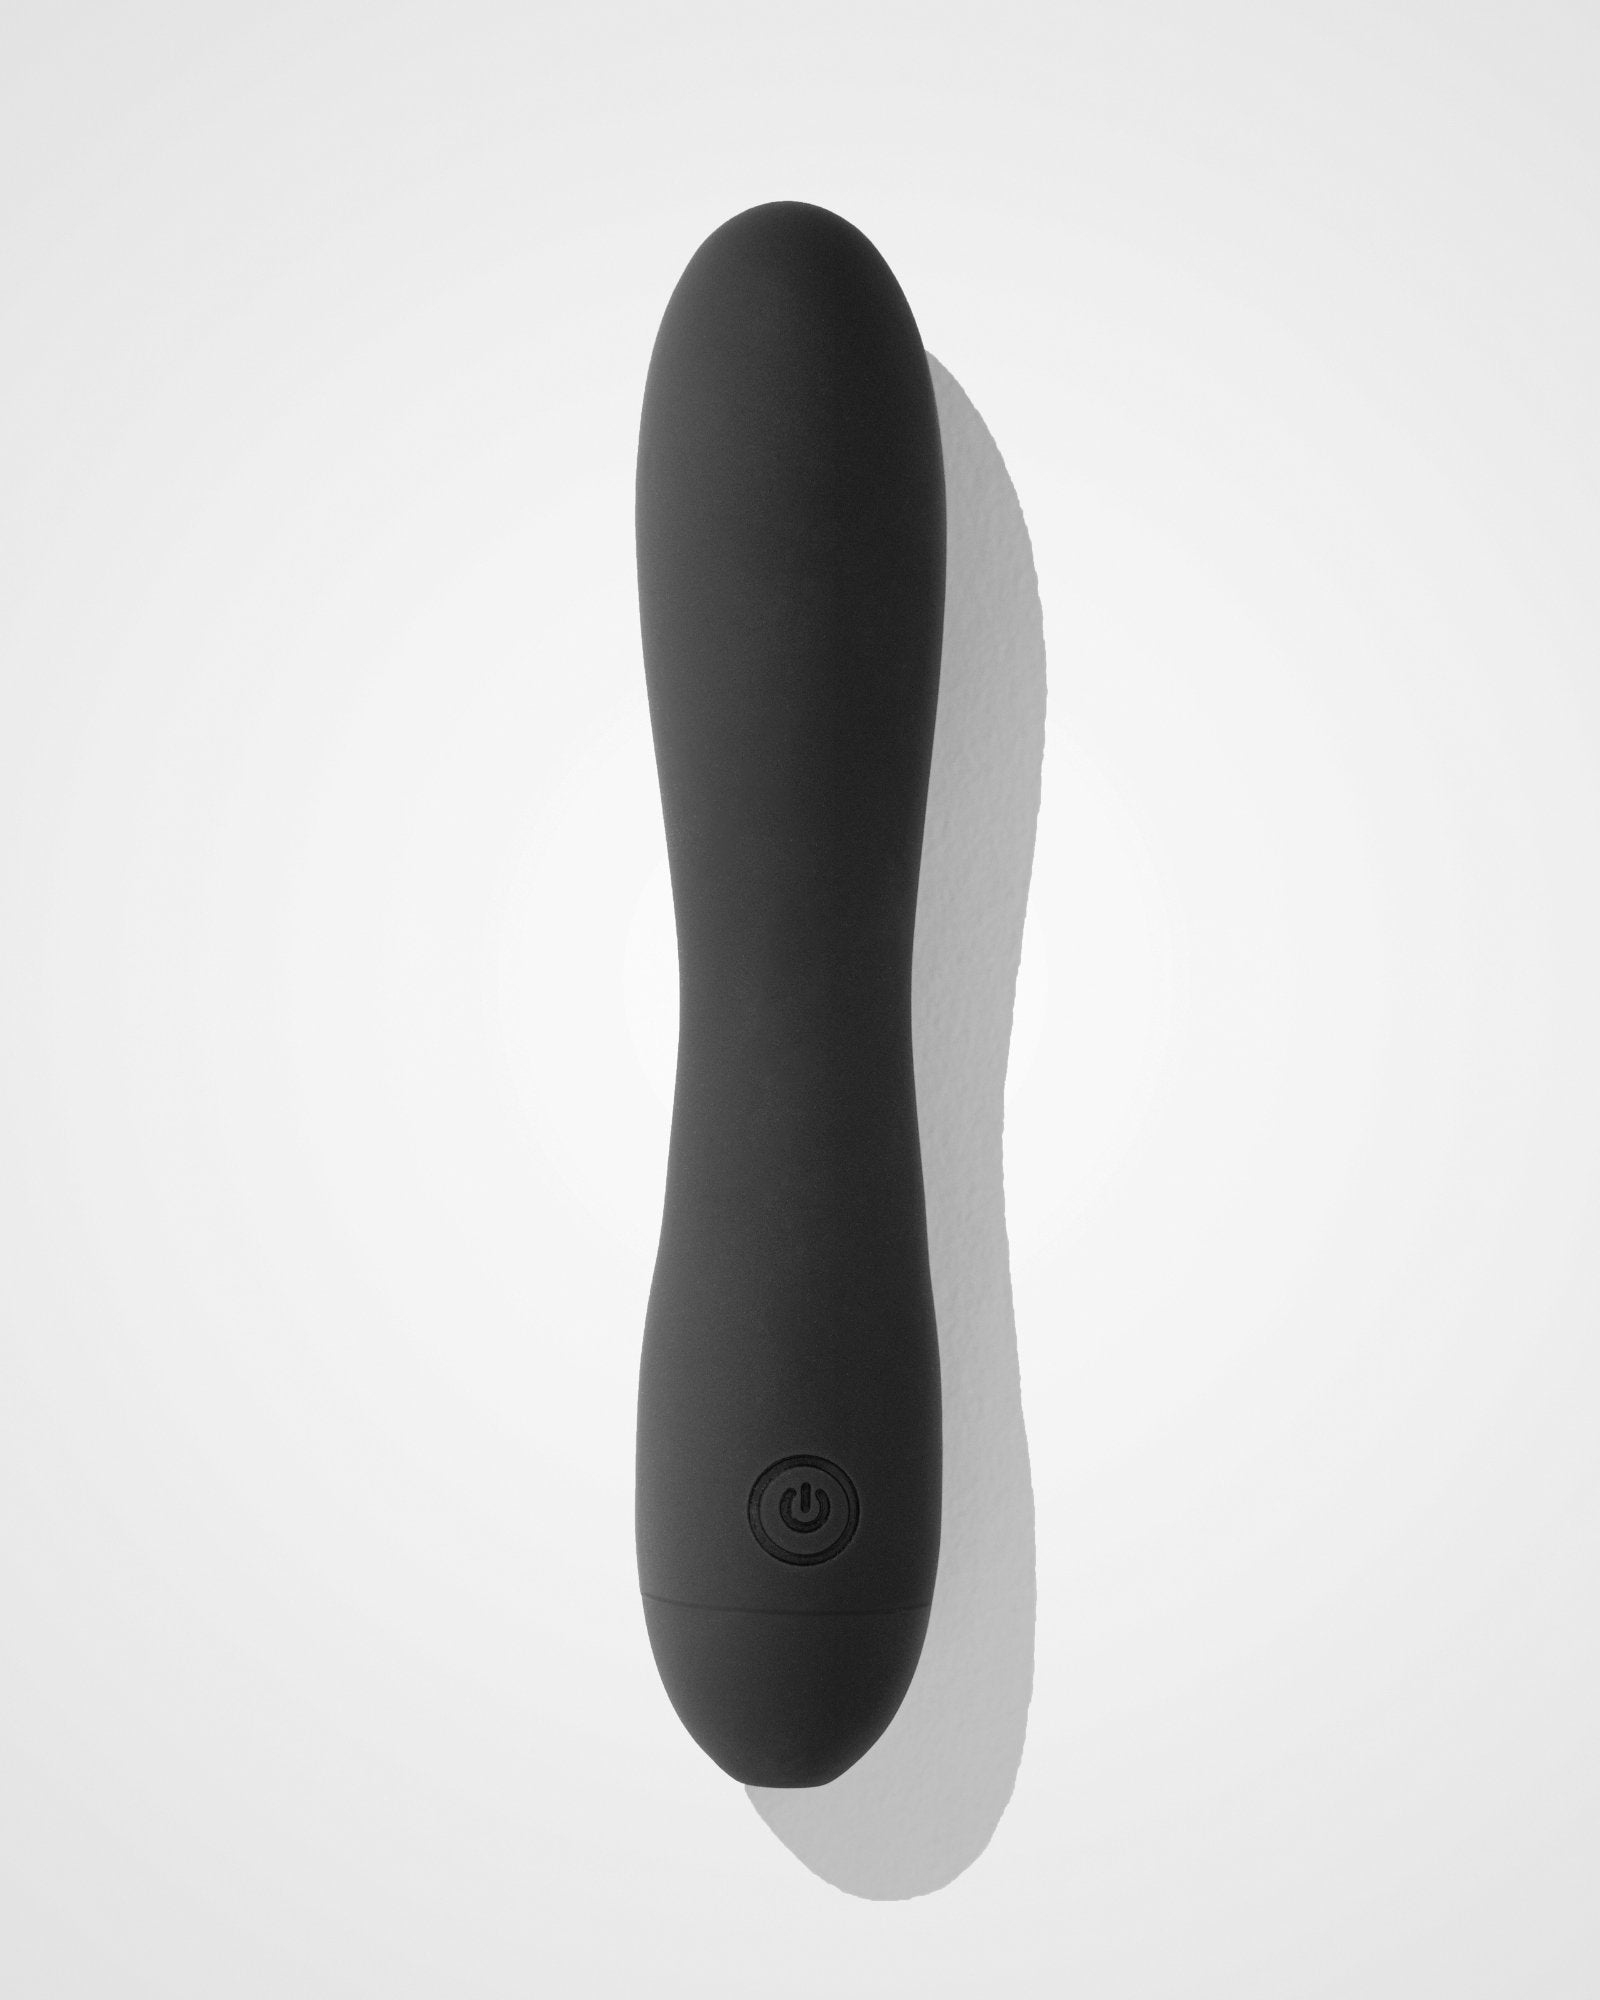 Sangya 1 - Discreet, water proof sex toy